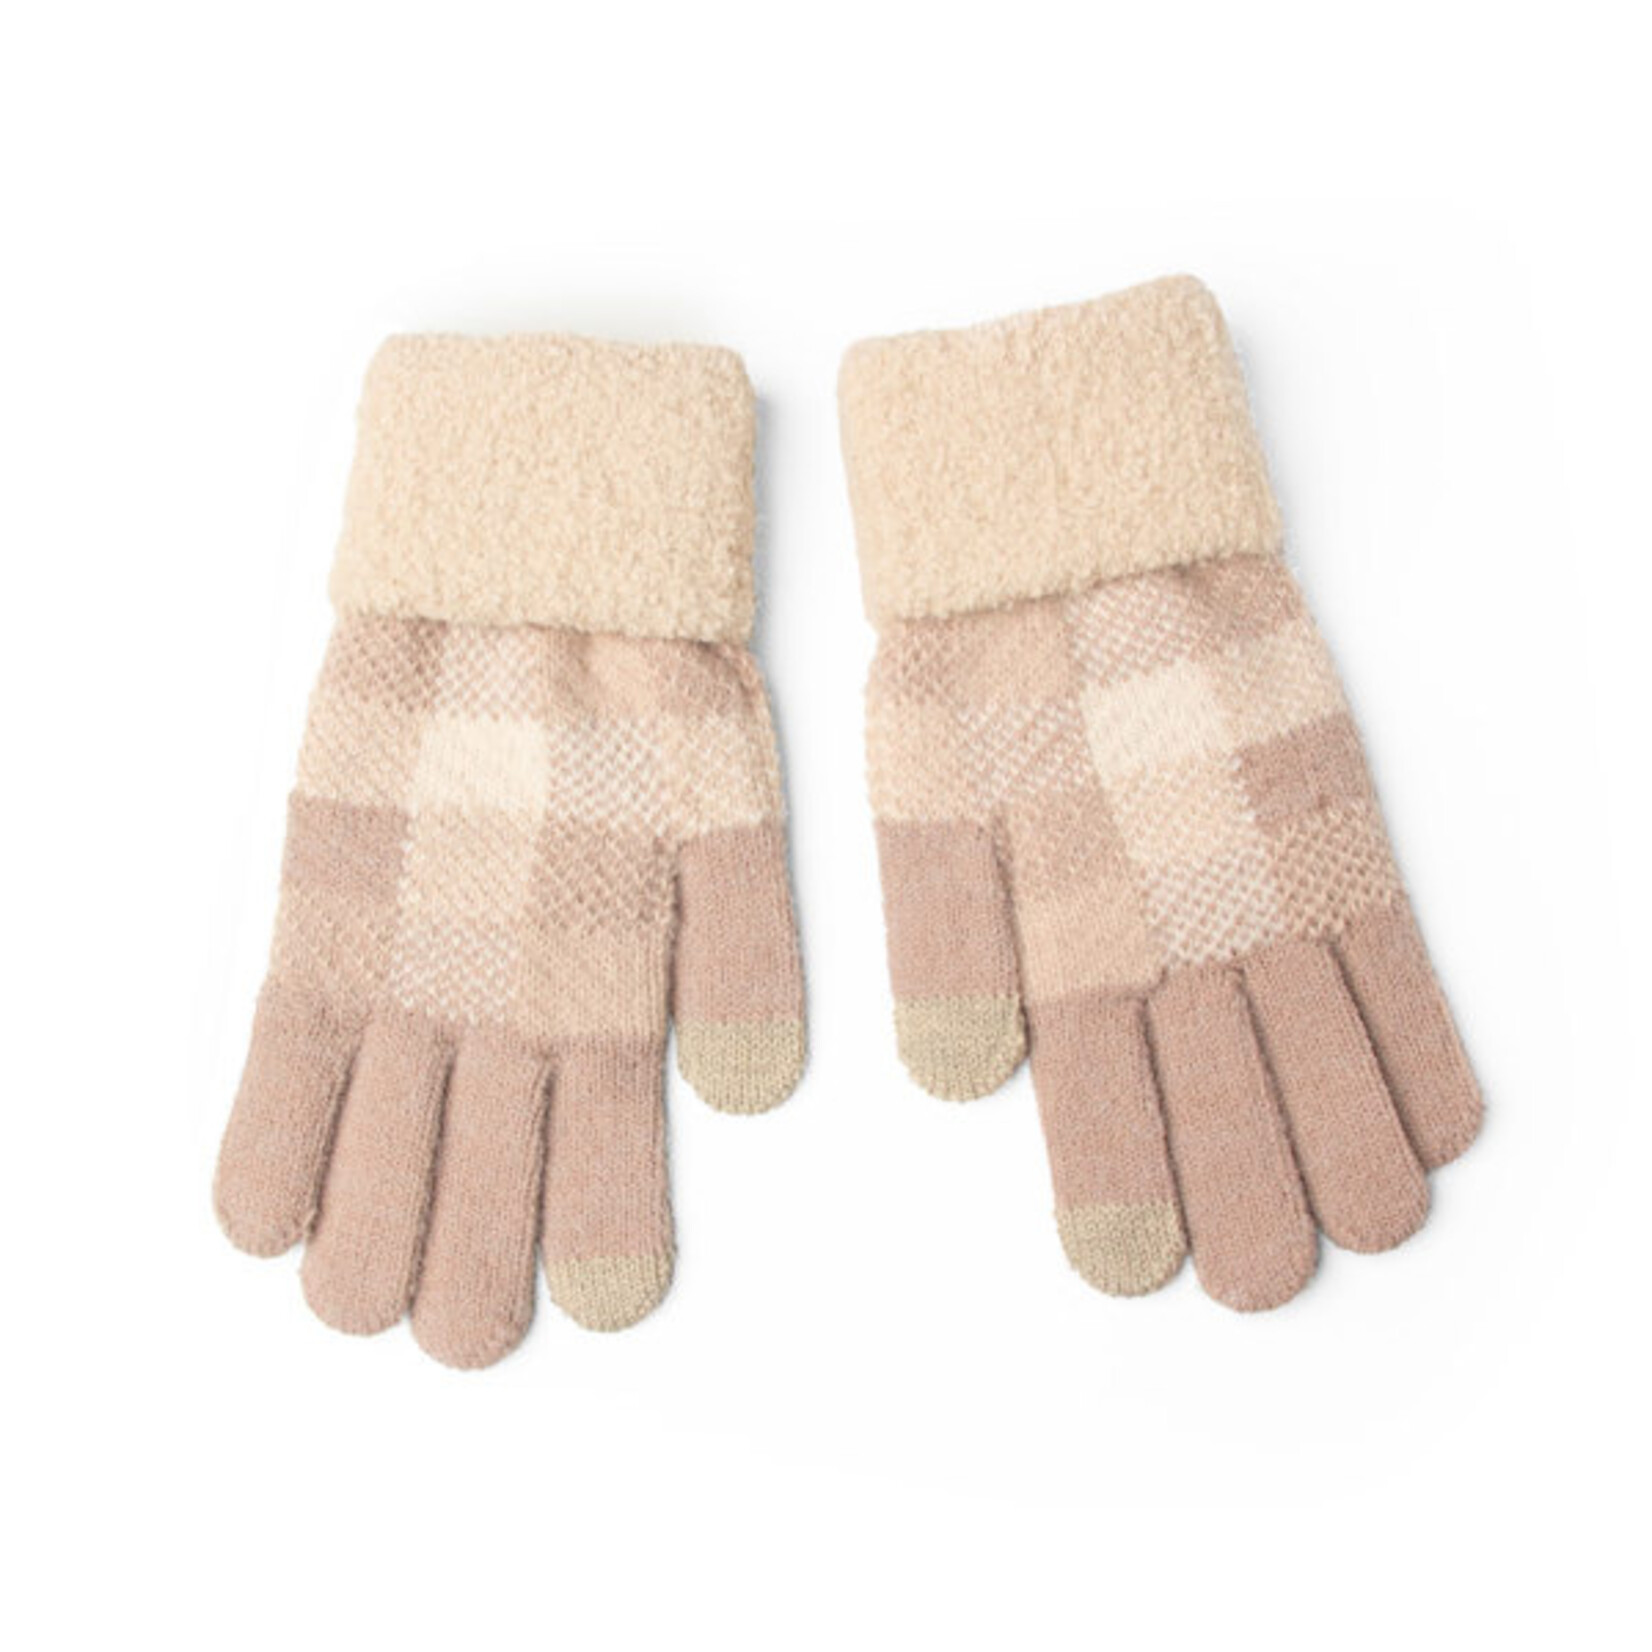 Britt's Knits - Sweater Weather Gloves - Tan